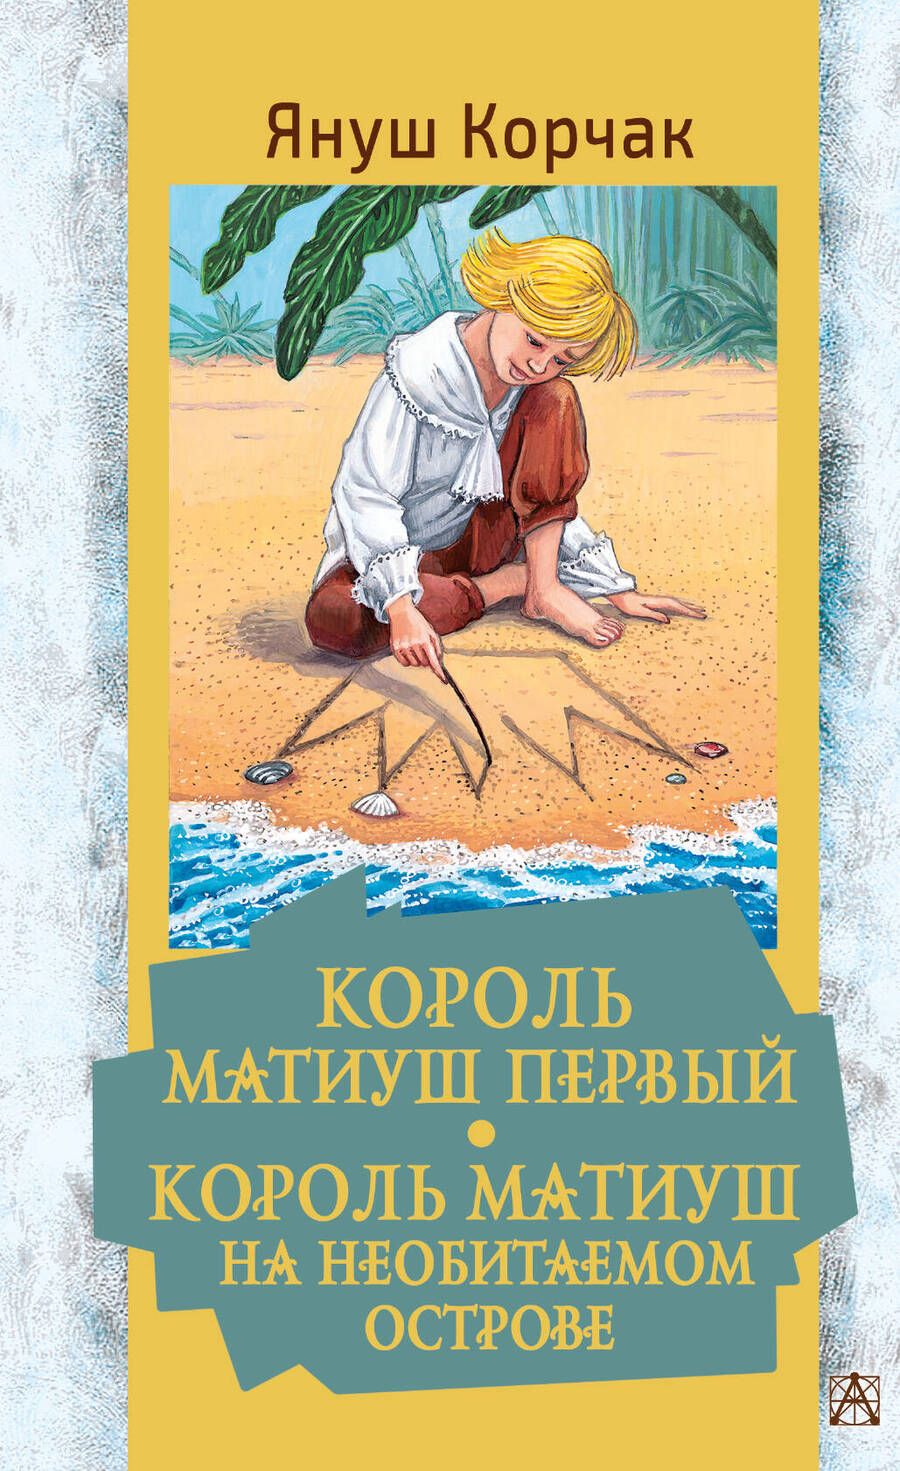 Обложка книги "Януш Корчак: Король Матиуш Первый. Король Матиуш на необитаемом острове"